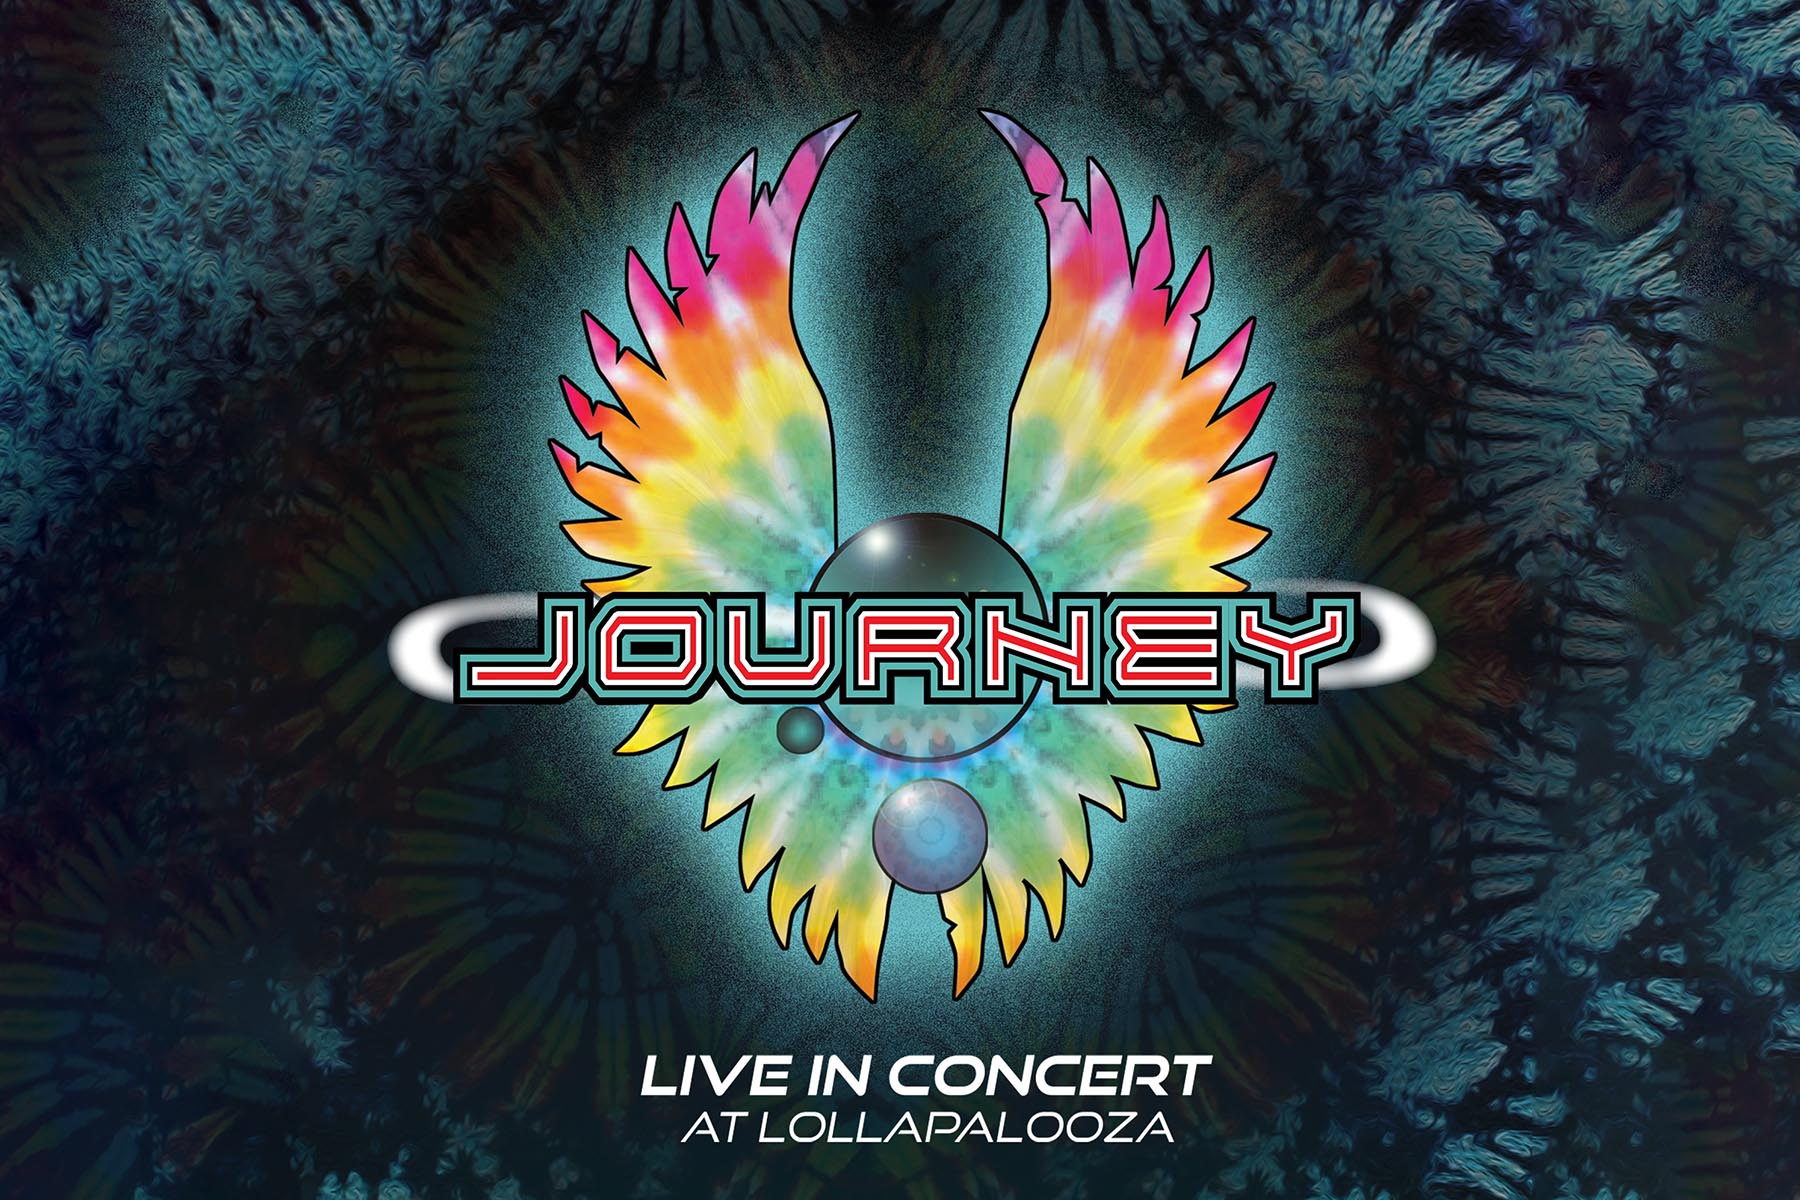 Live journey. Journey концерт. Journey Live in Concert Lollapalooza 2022. Journey "Live in Manila". Journey - Live in Concert at Lollapalooza lossless.